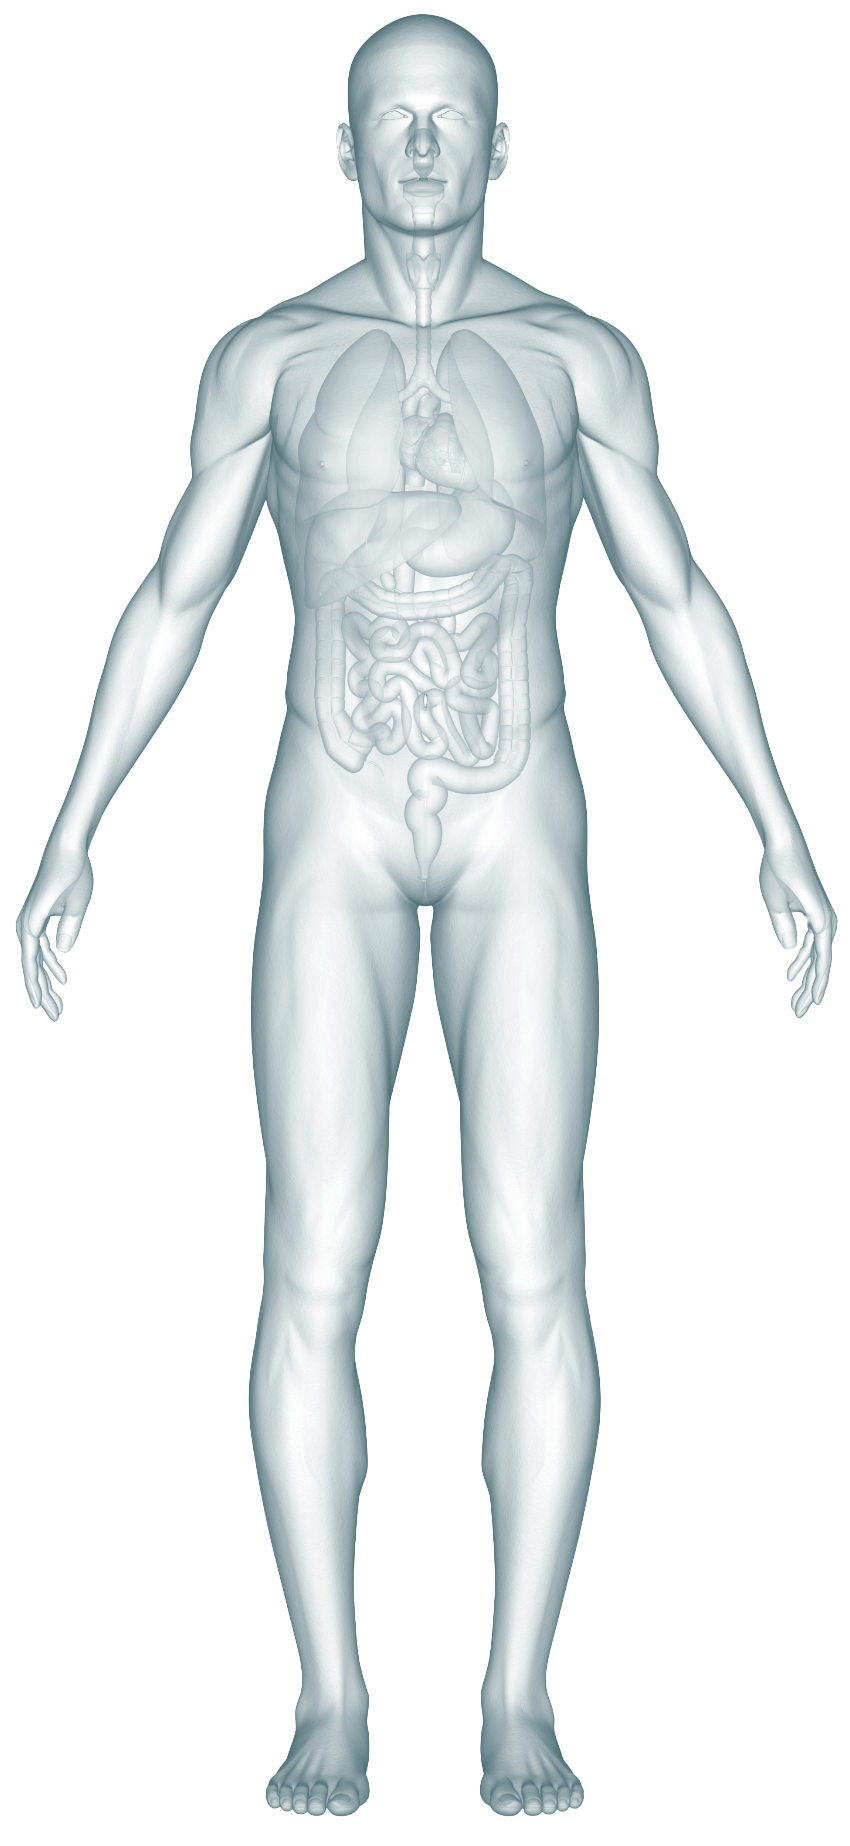 Body Map Image showing major organs